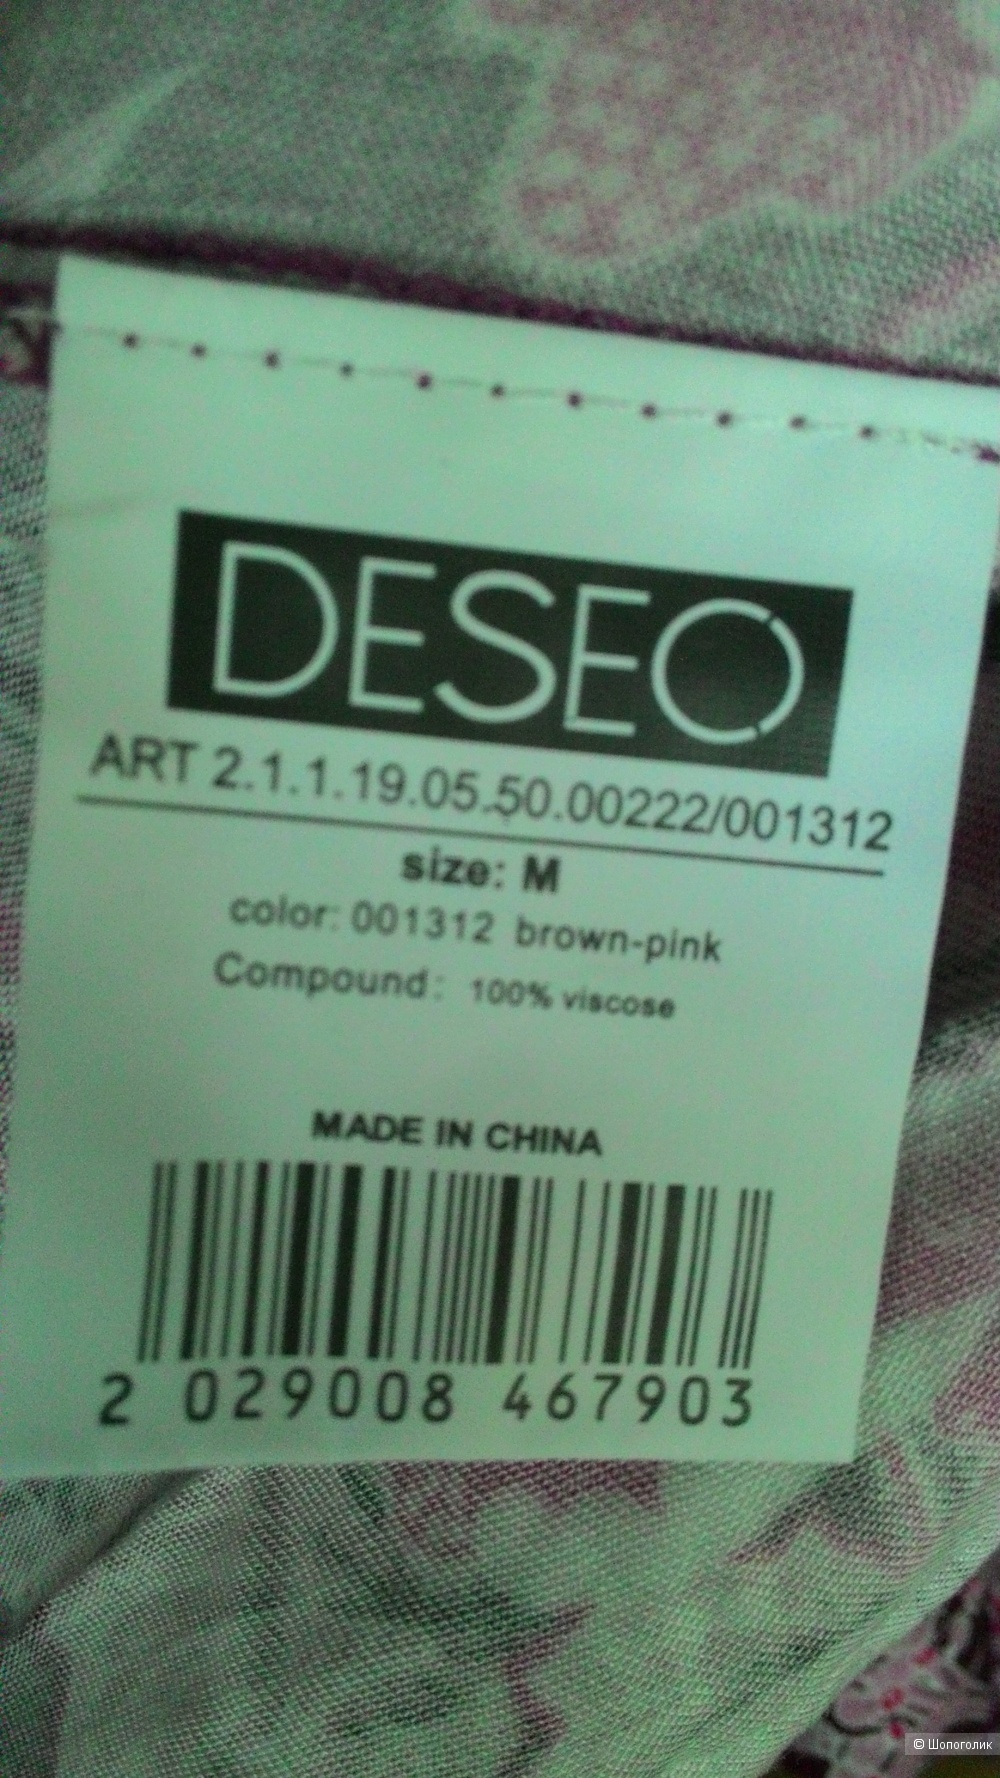 Домашний комплект (халат+брюки) DESEO, 46 (М)